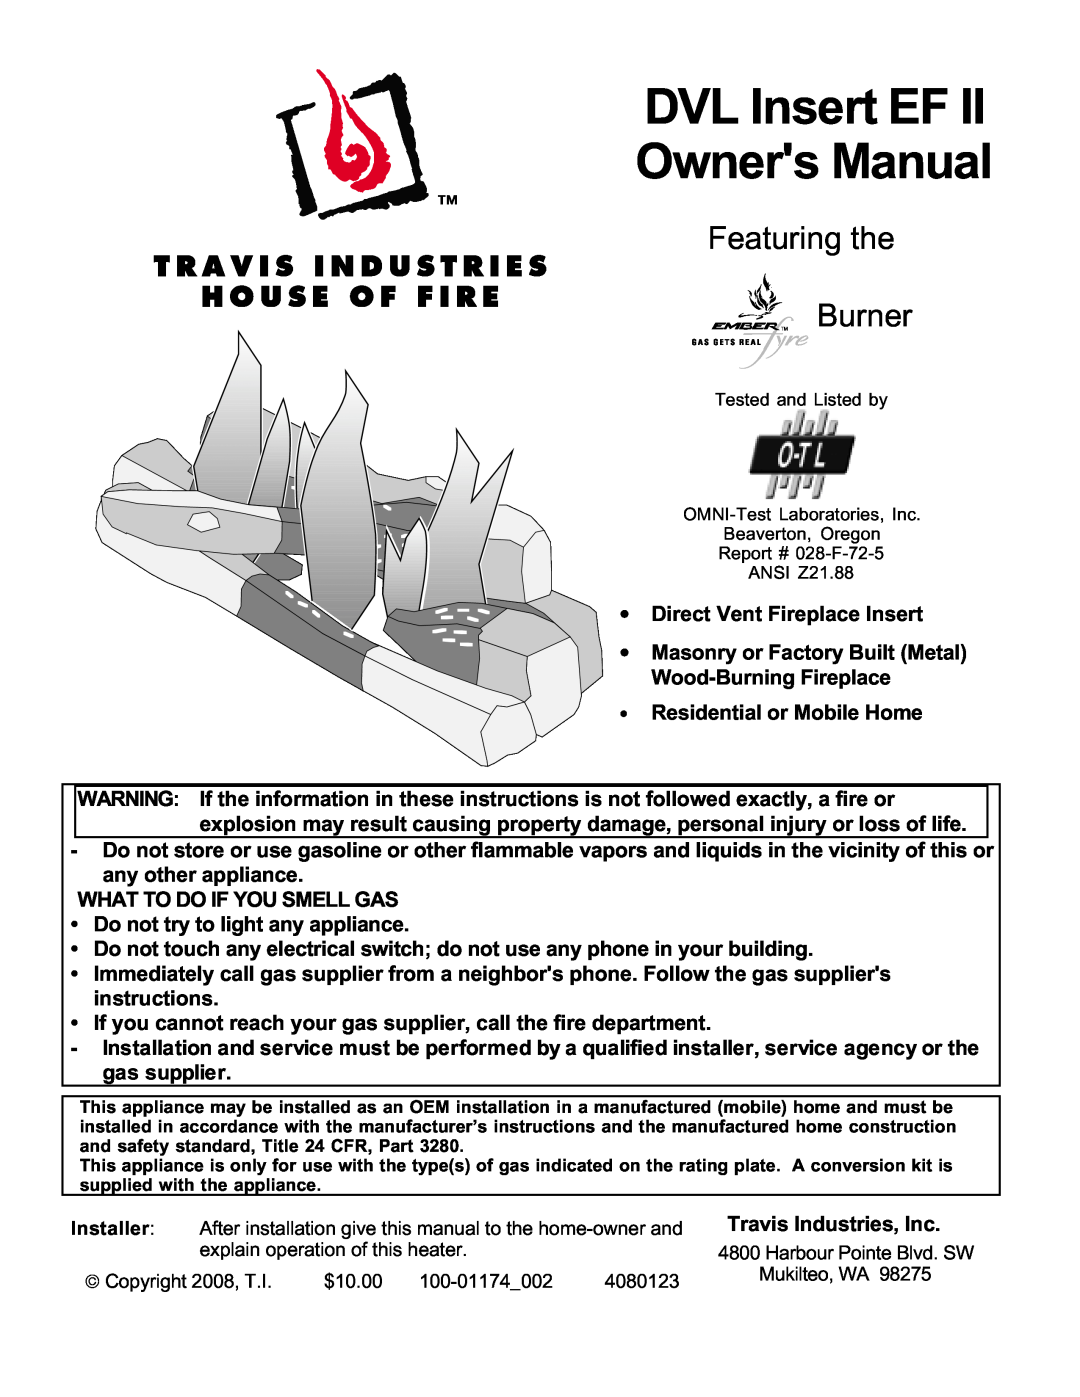 Avalon Stoves DVL Insert EF II owner manual Featuring the Burner 